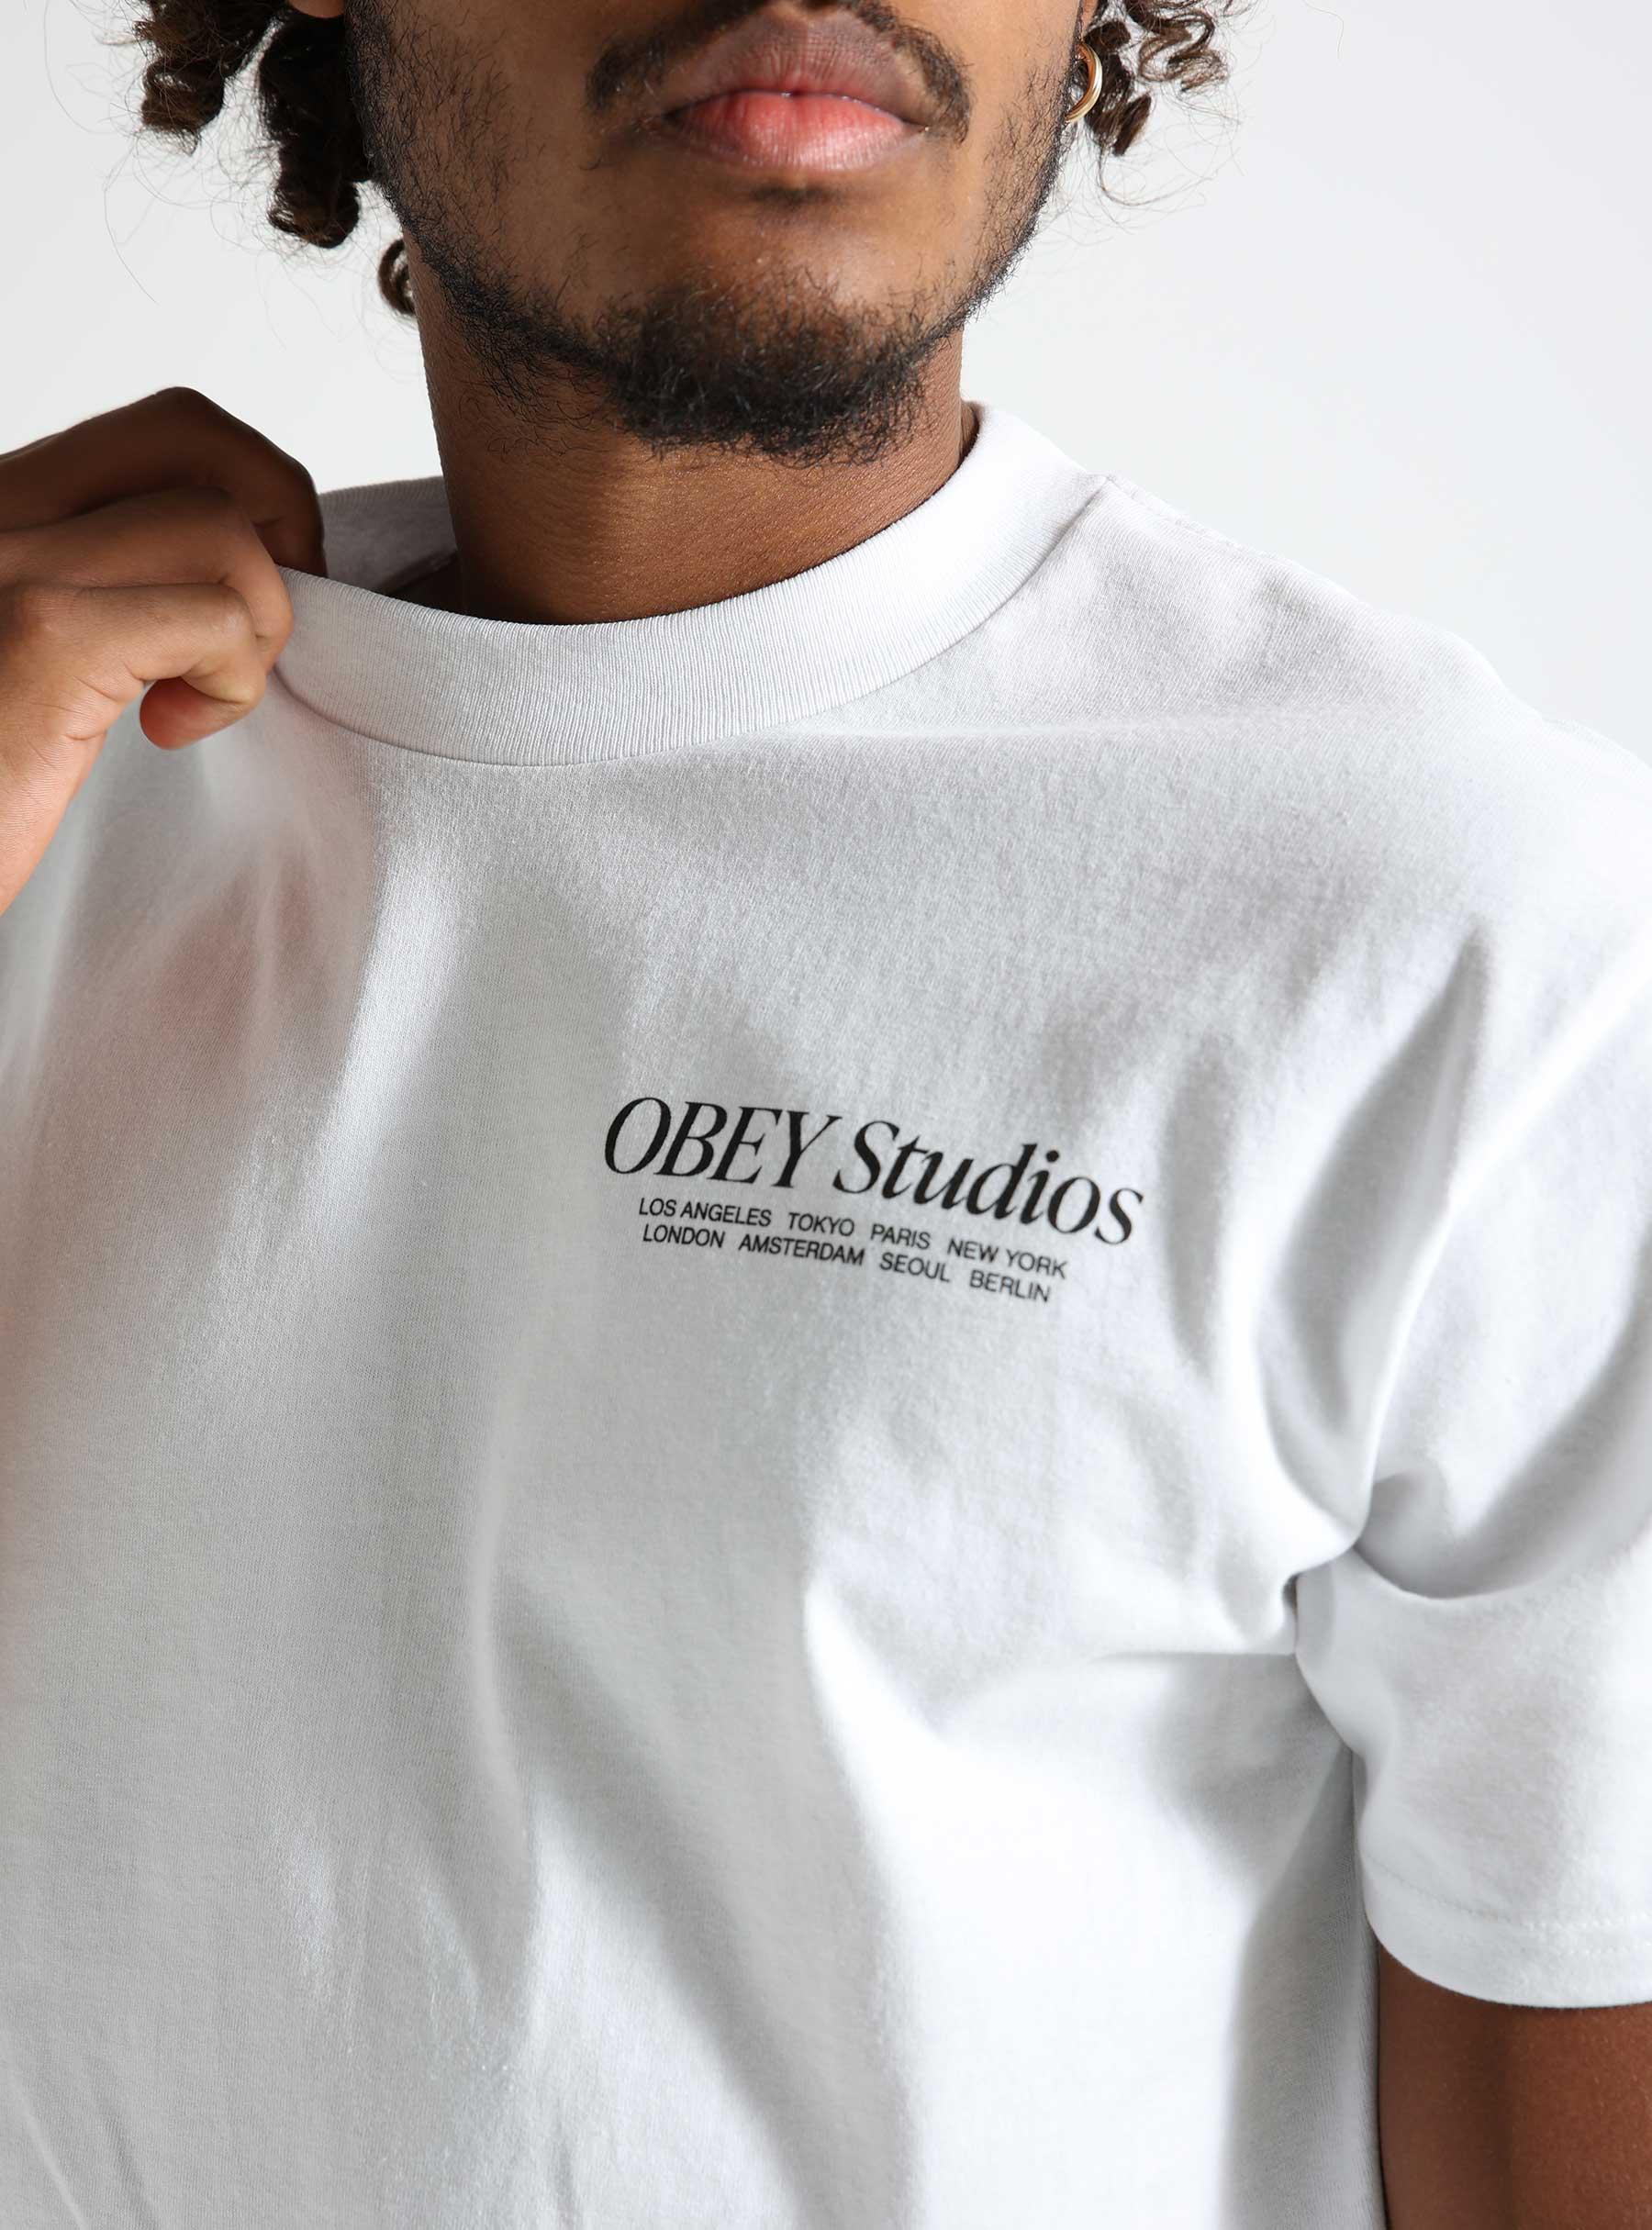 Obey Studios T-shirt White 165263772-WHT